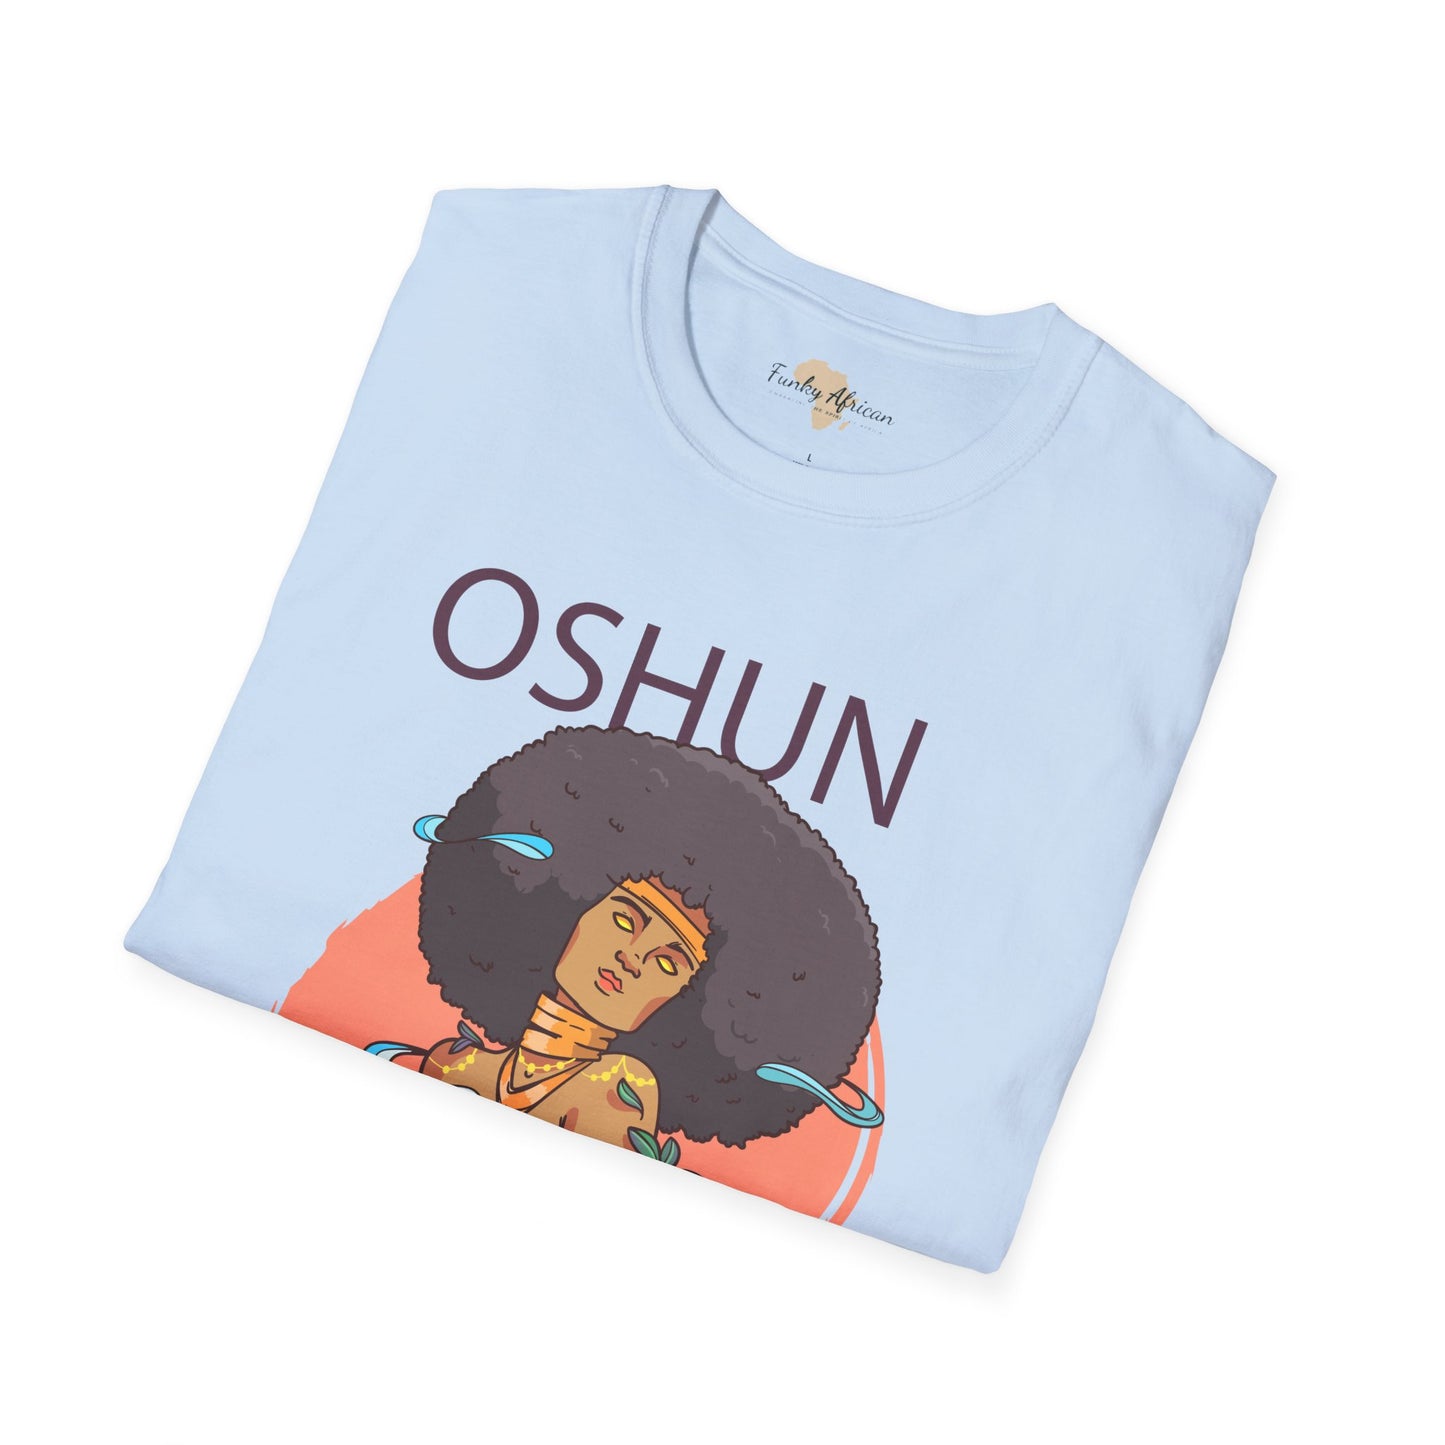 Oshun unisex softstyle tee